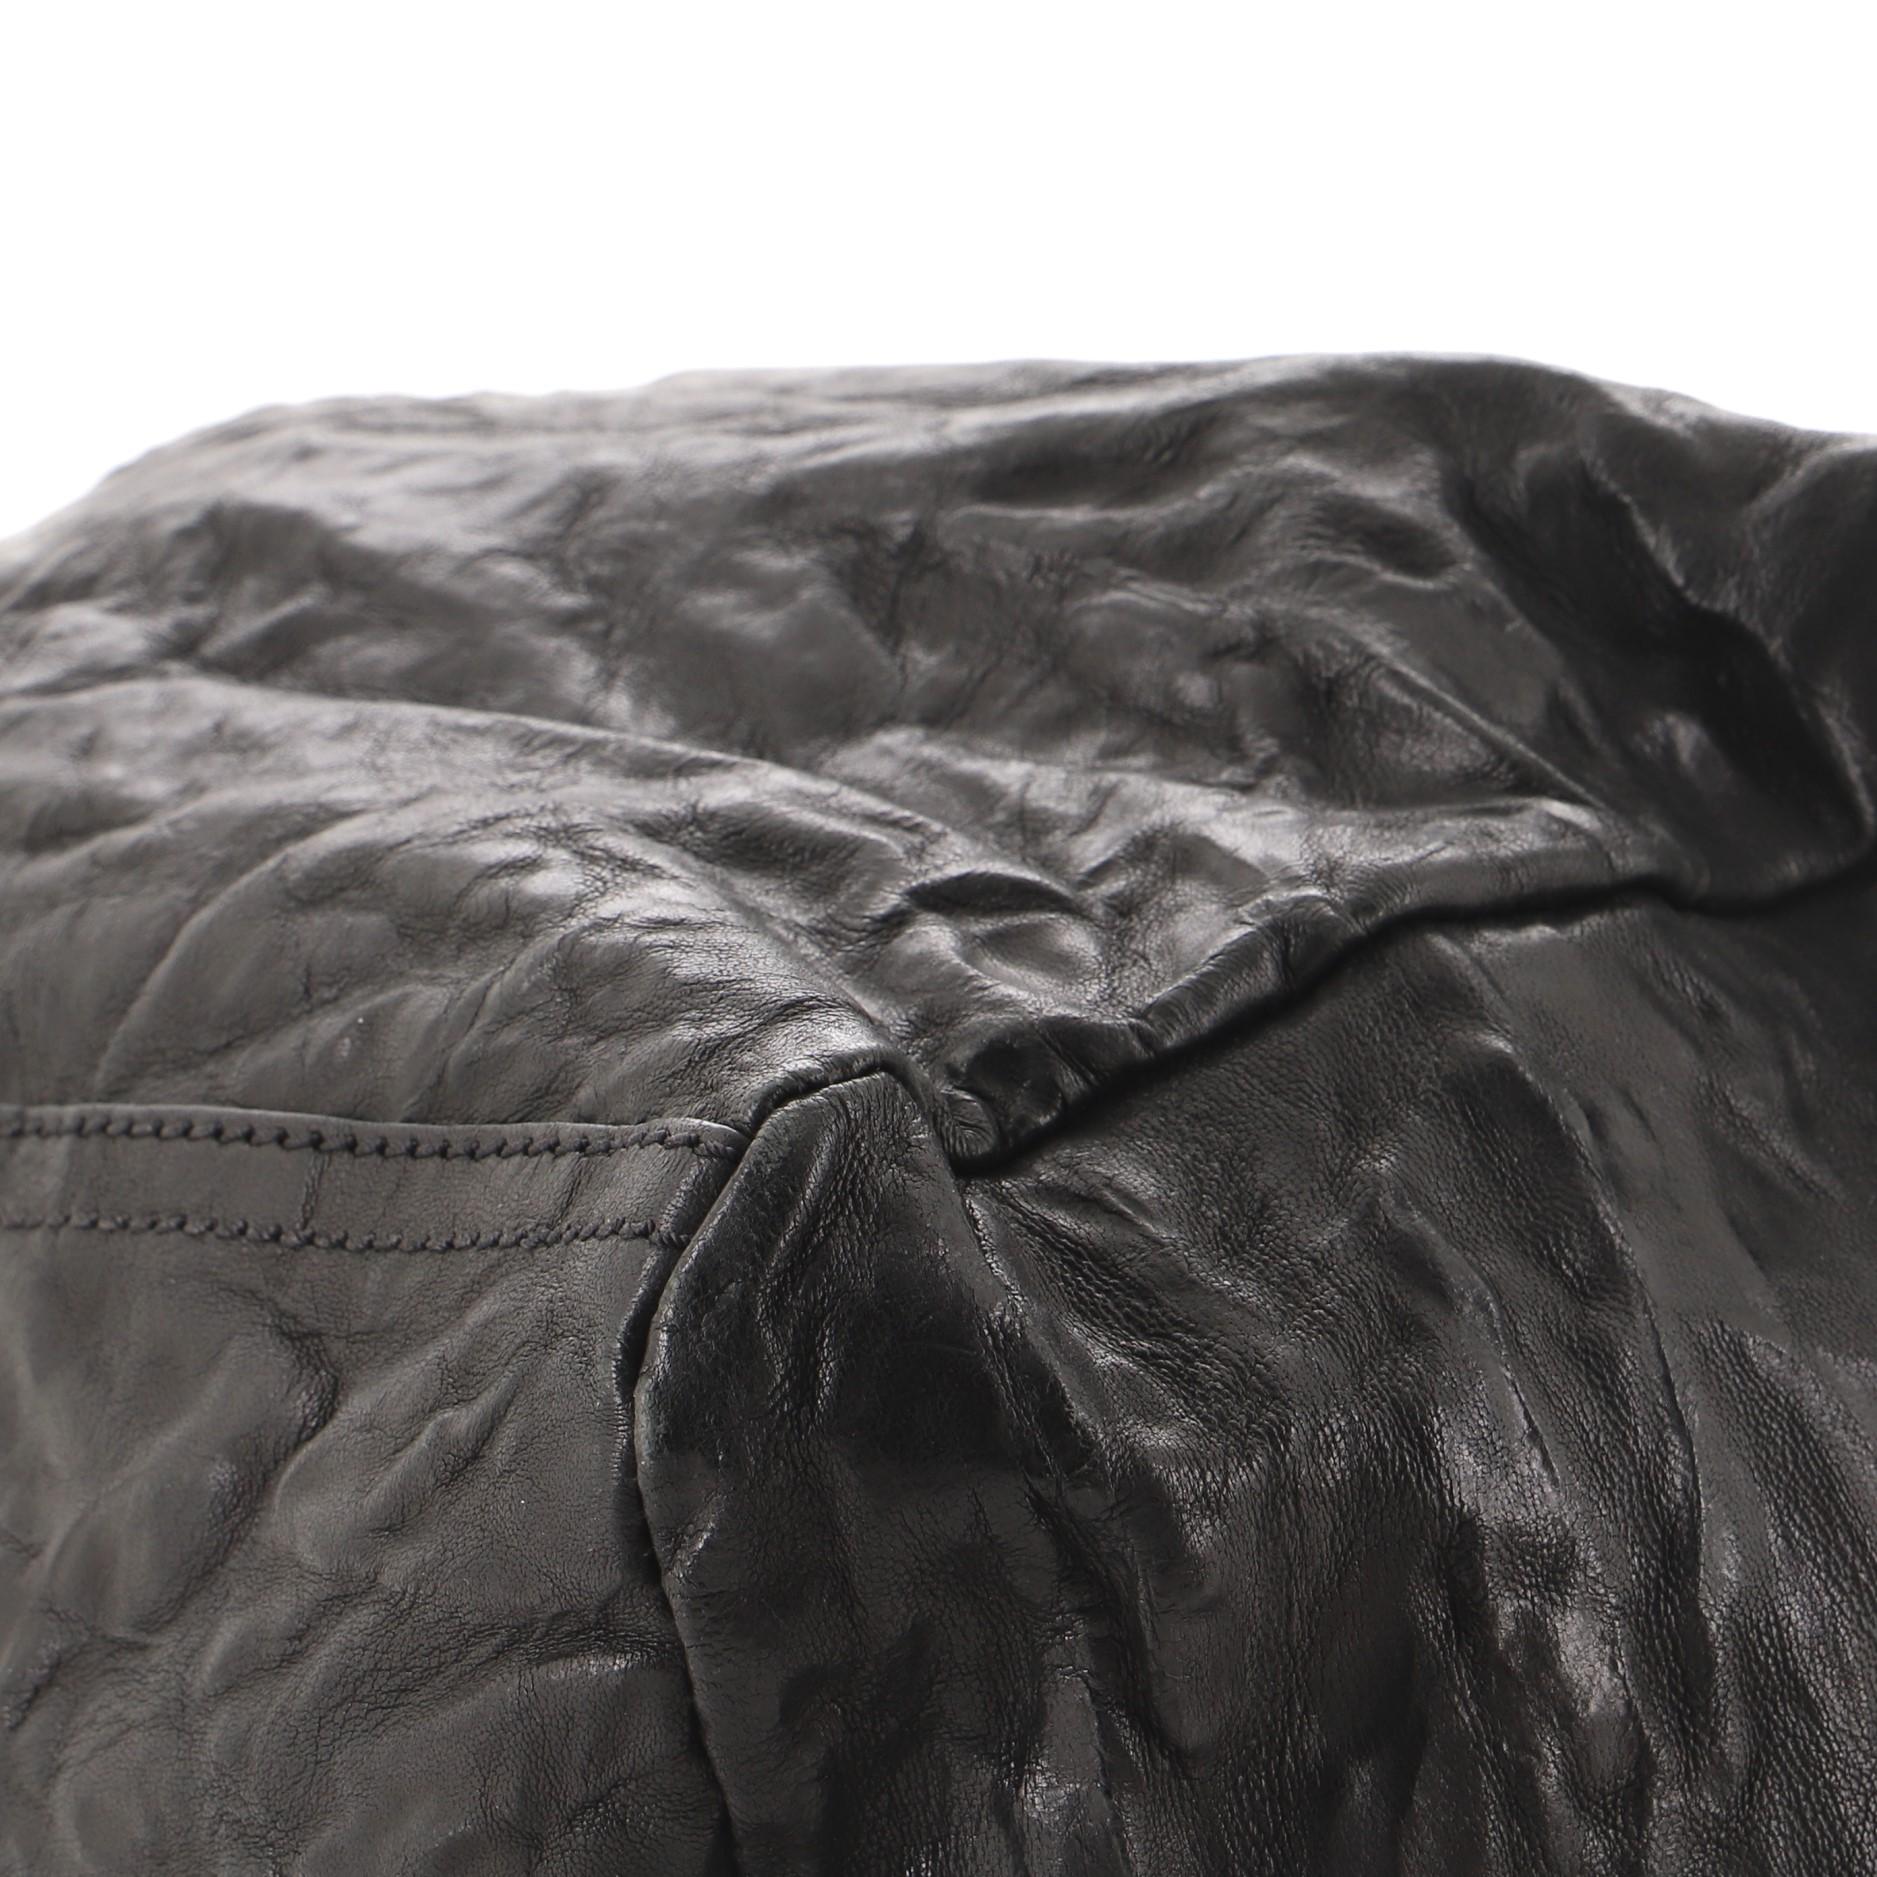 Givenchy Pandora Bag Distressed Leather Medium 1